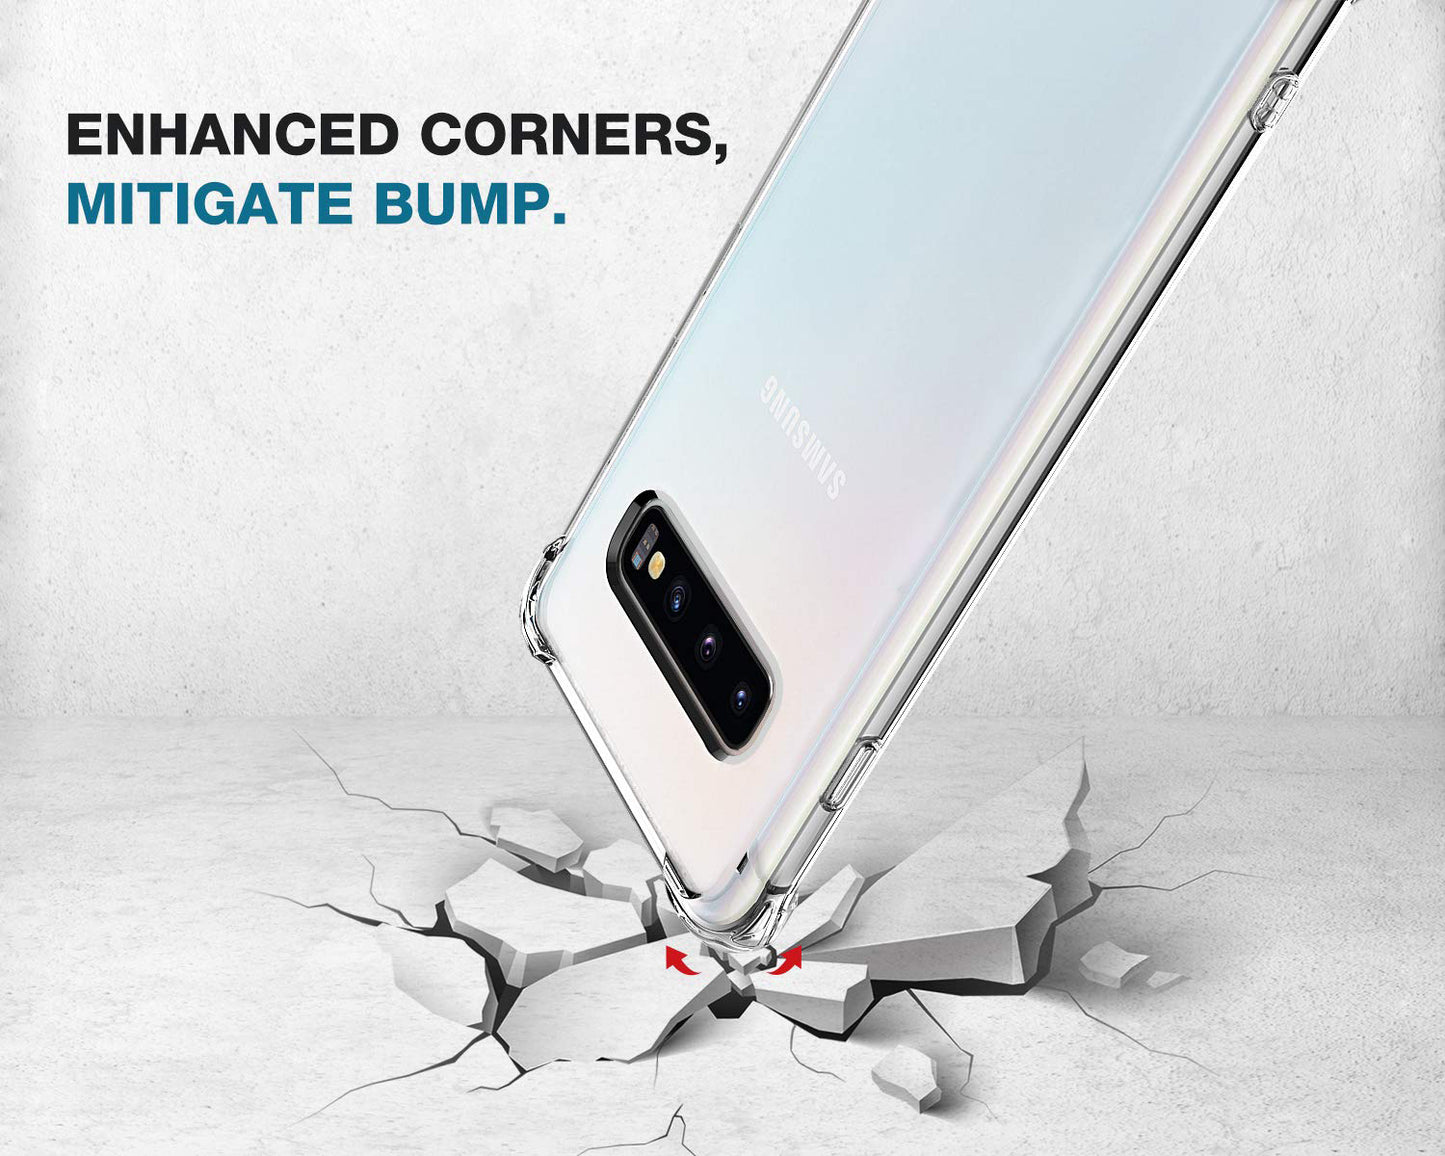 For Samsung Galaxy S10 Plus Case Clear Reinforced Corners TPU Bumper Anti-Scratch Rugged Transparent Hard Panel Cover